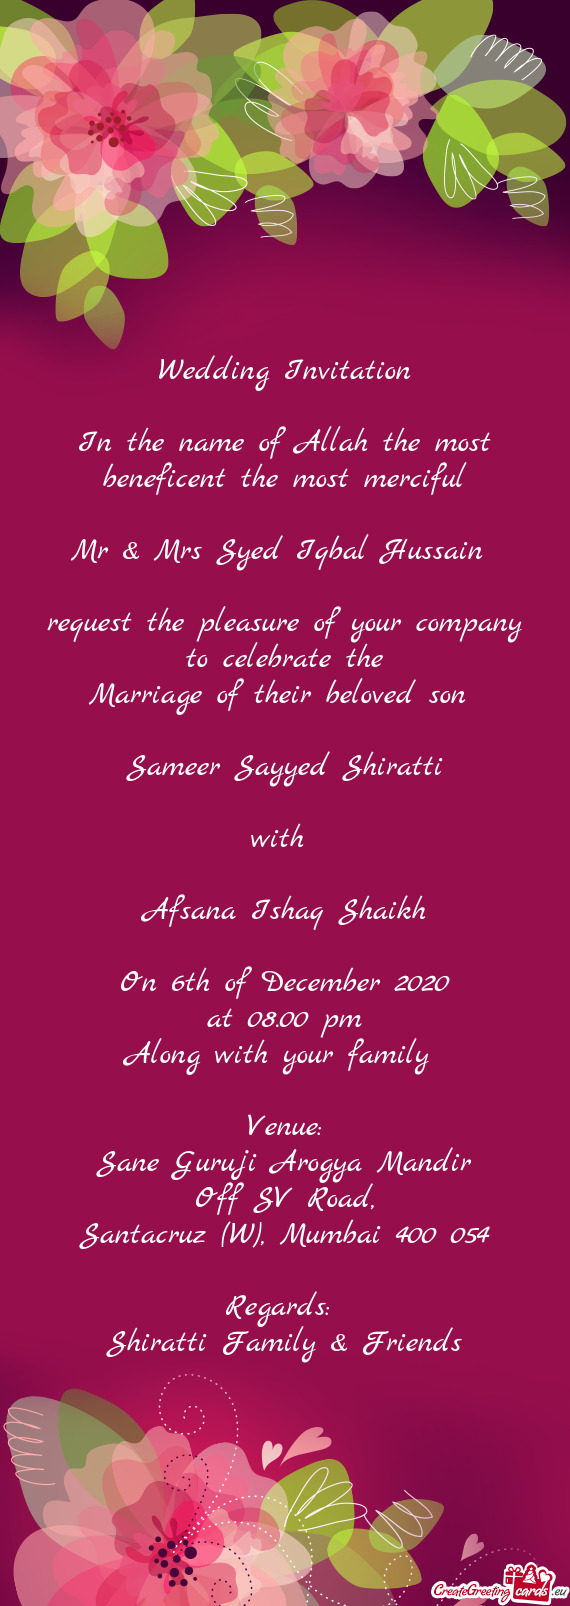 Mr & Mrs Syed Iqbal Hussain